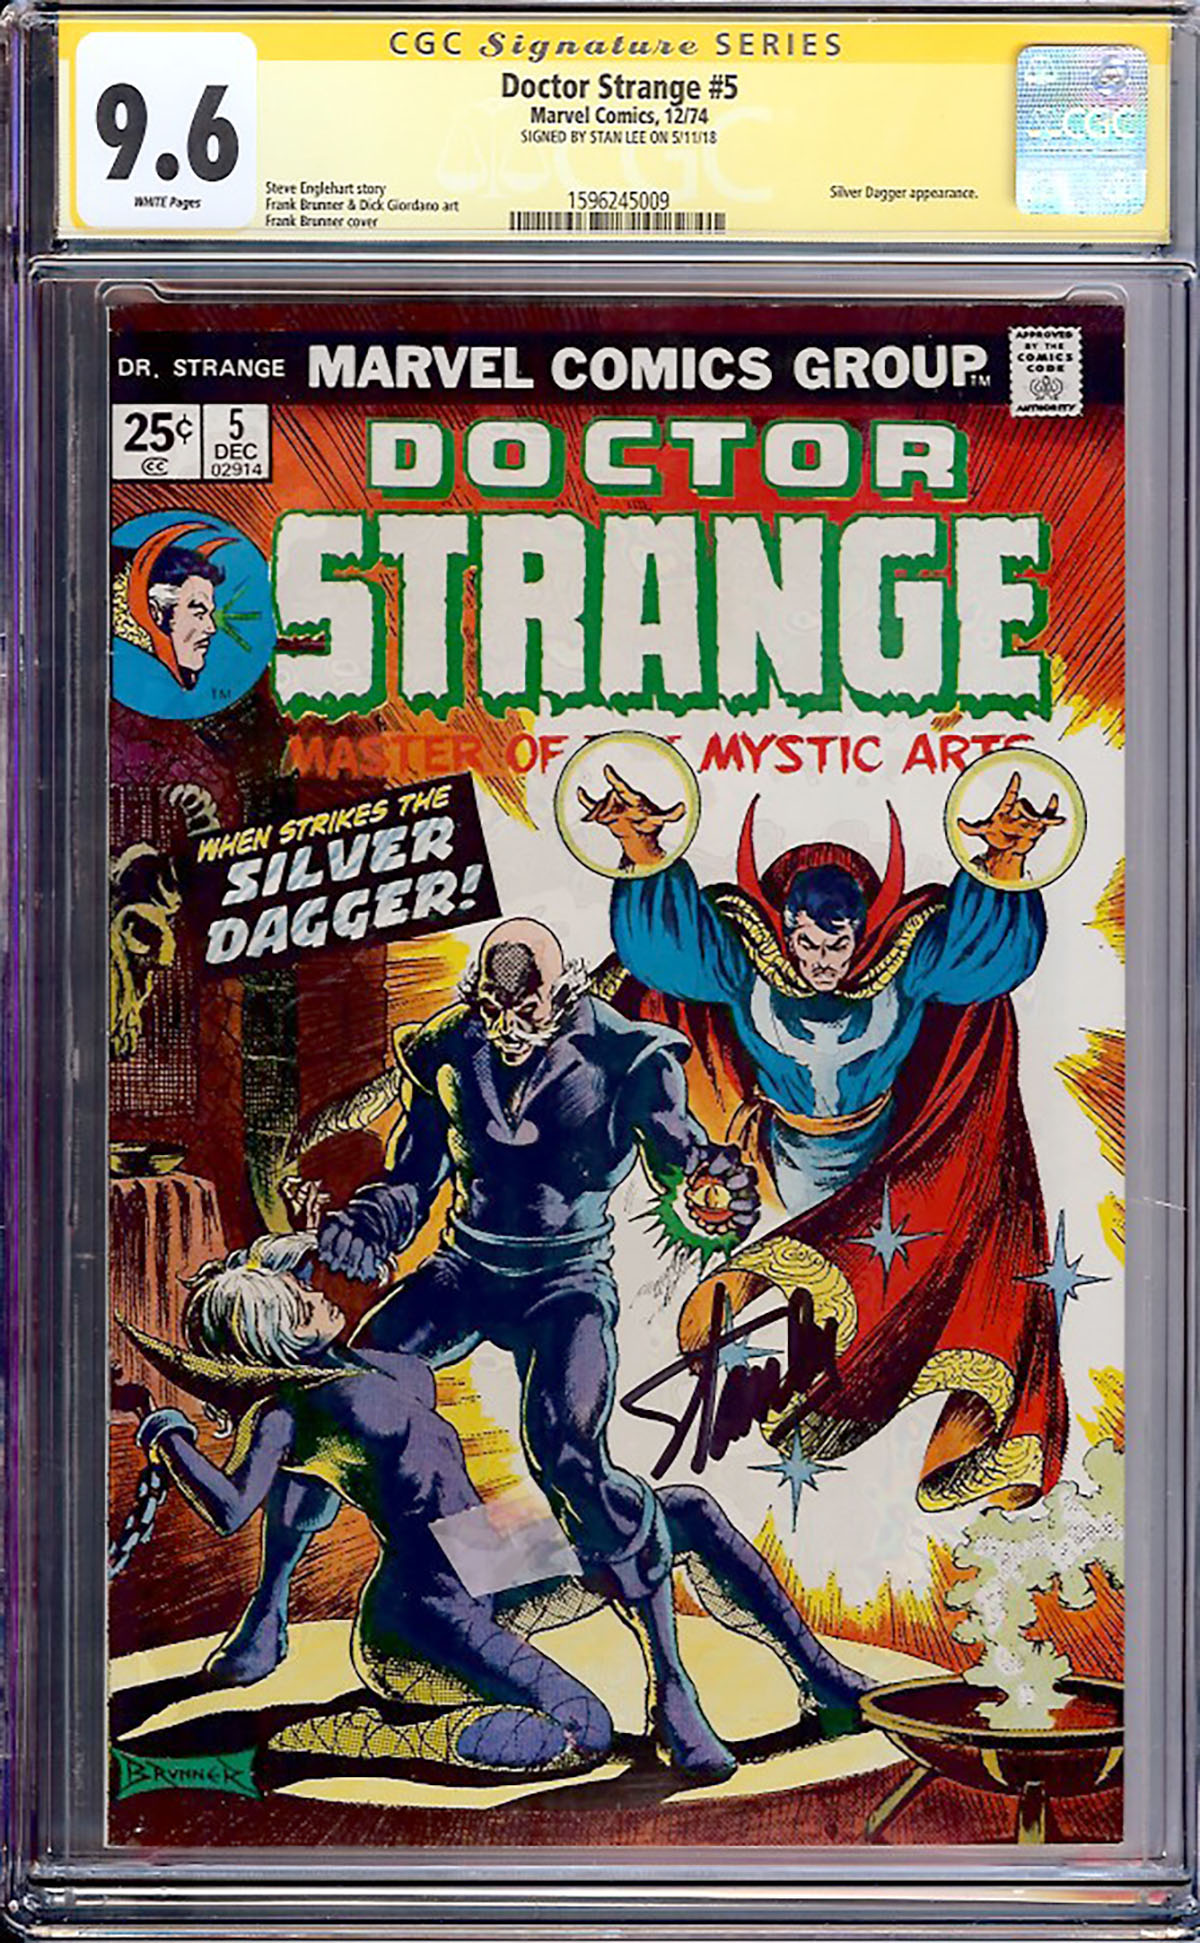 Doctor Strange #5 CGC 9.6 w CGC Signature SERIES